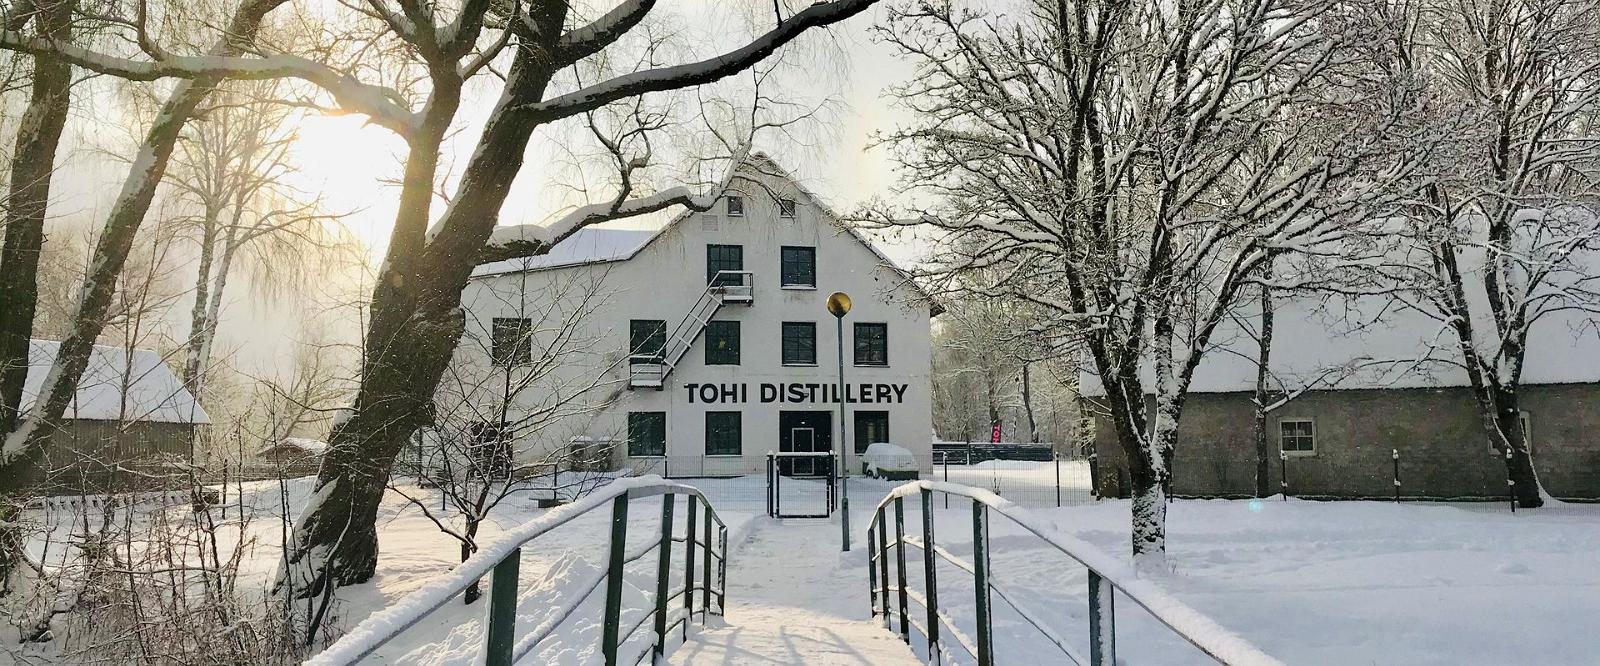 Tohi Distillery maja talvel